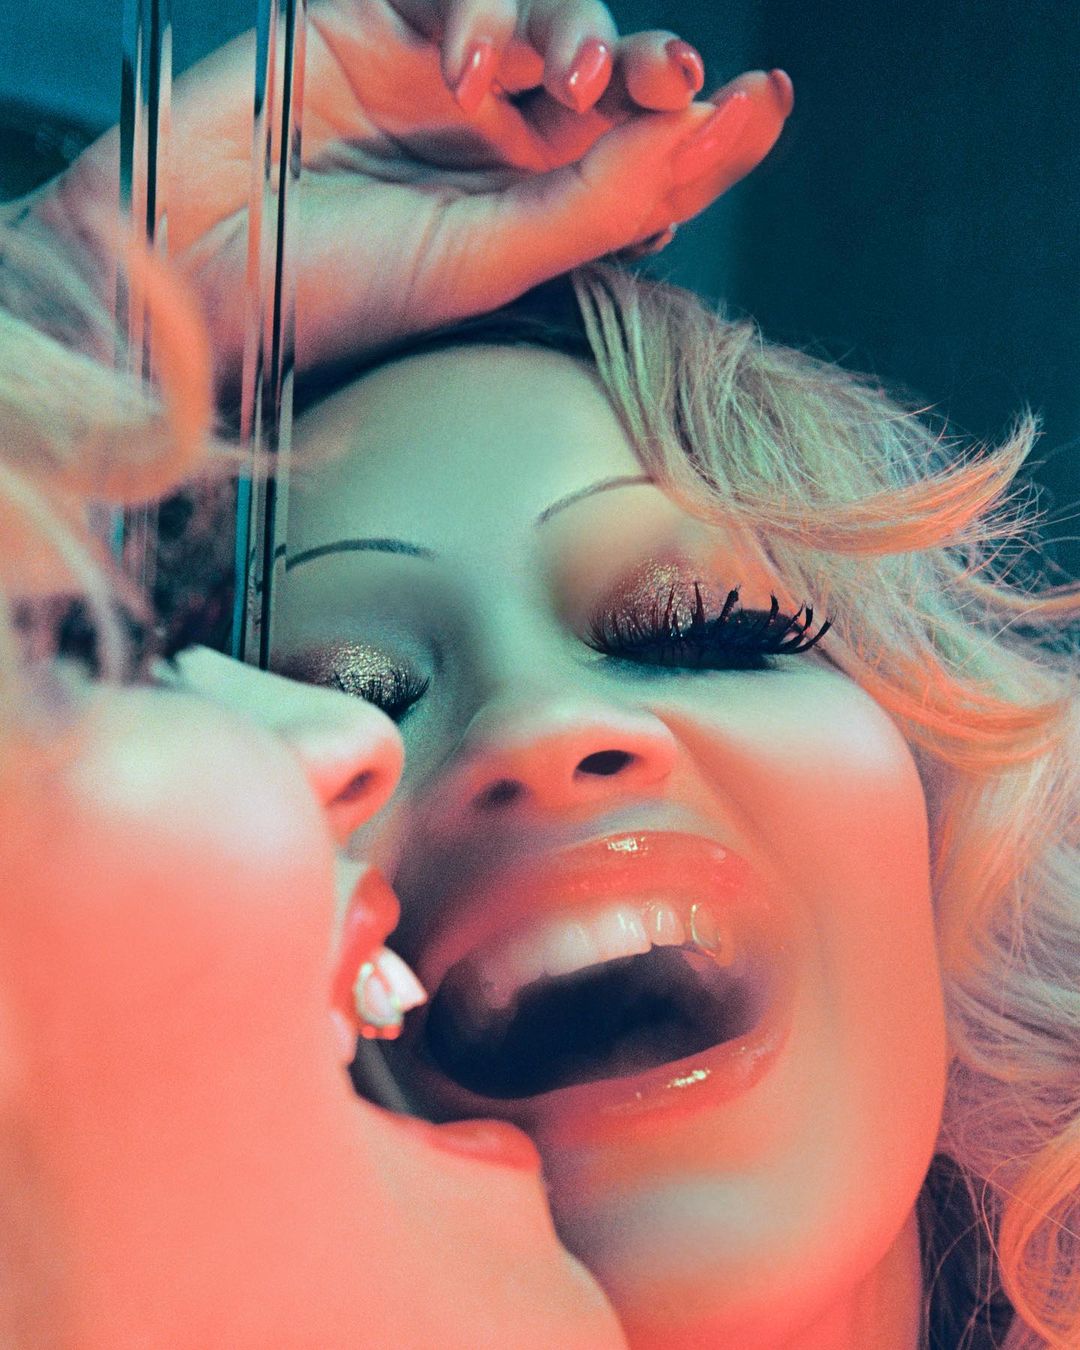 FOTOS Rita Ora quiere emborracharte! - Photo 9